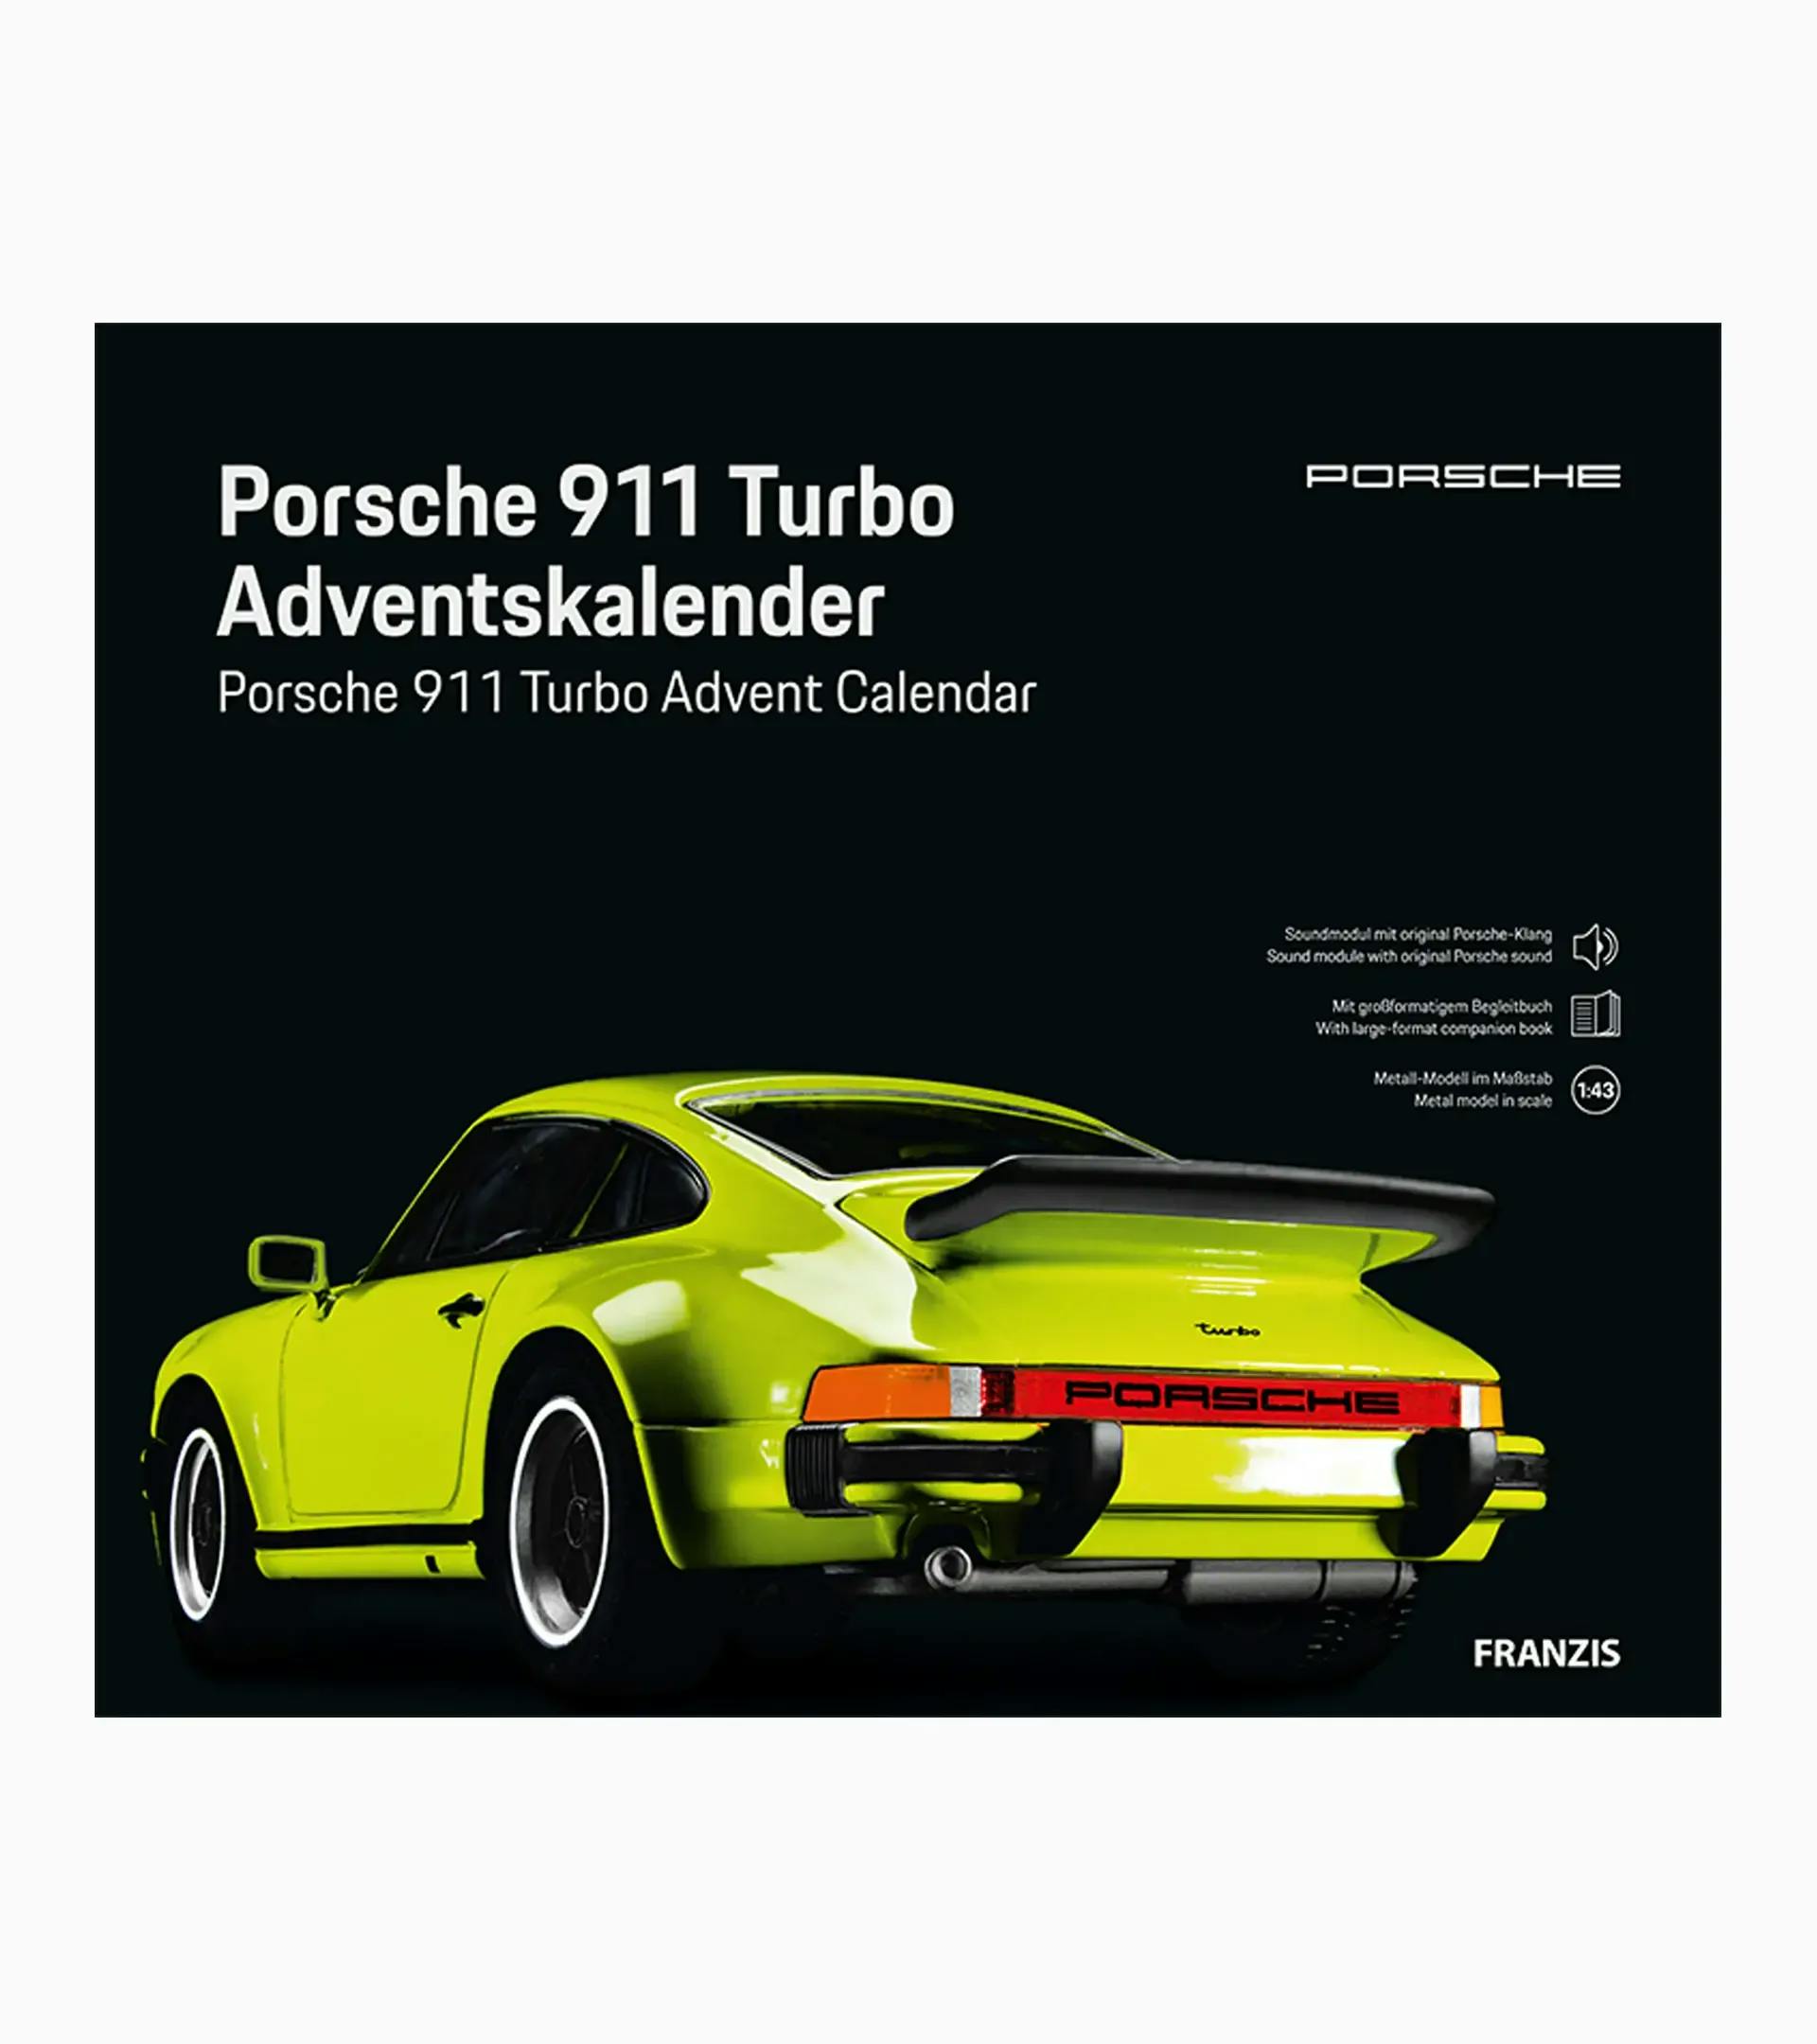 Porsche 911 Turbo advent calendar 2